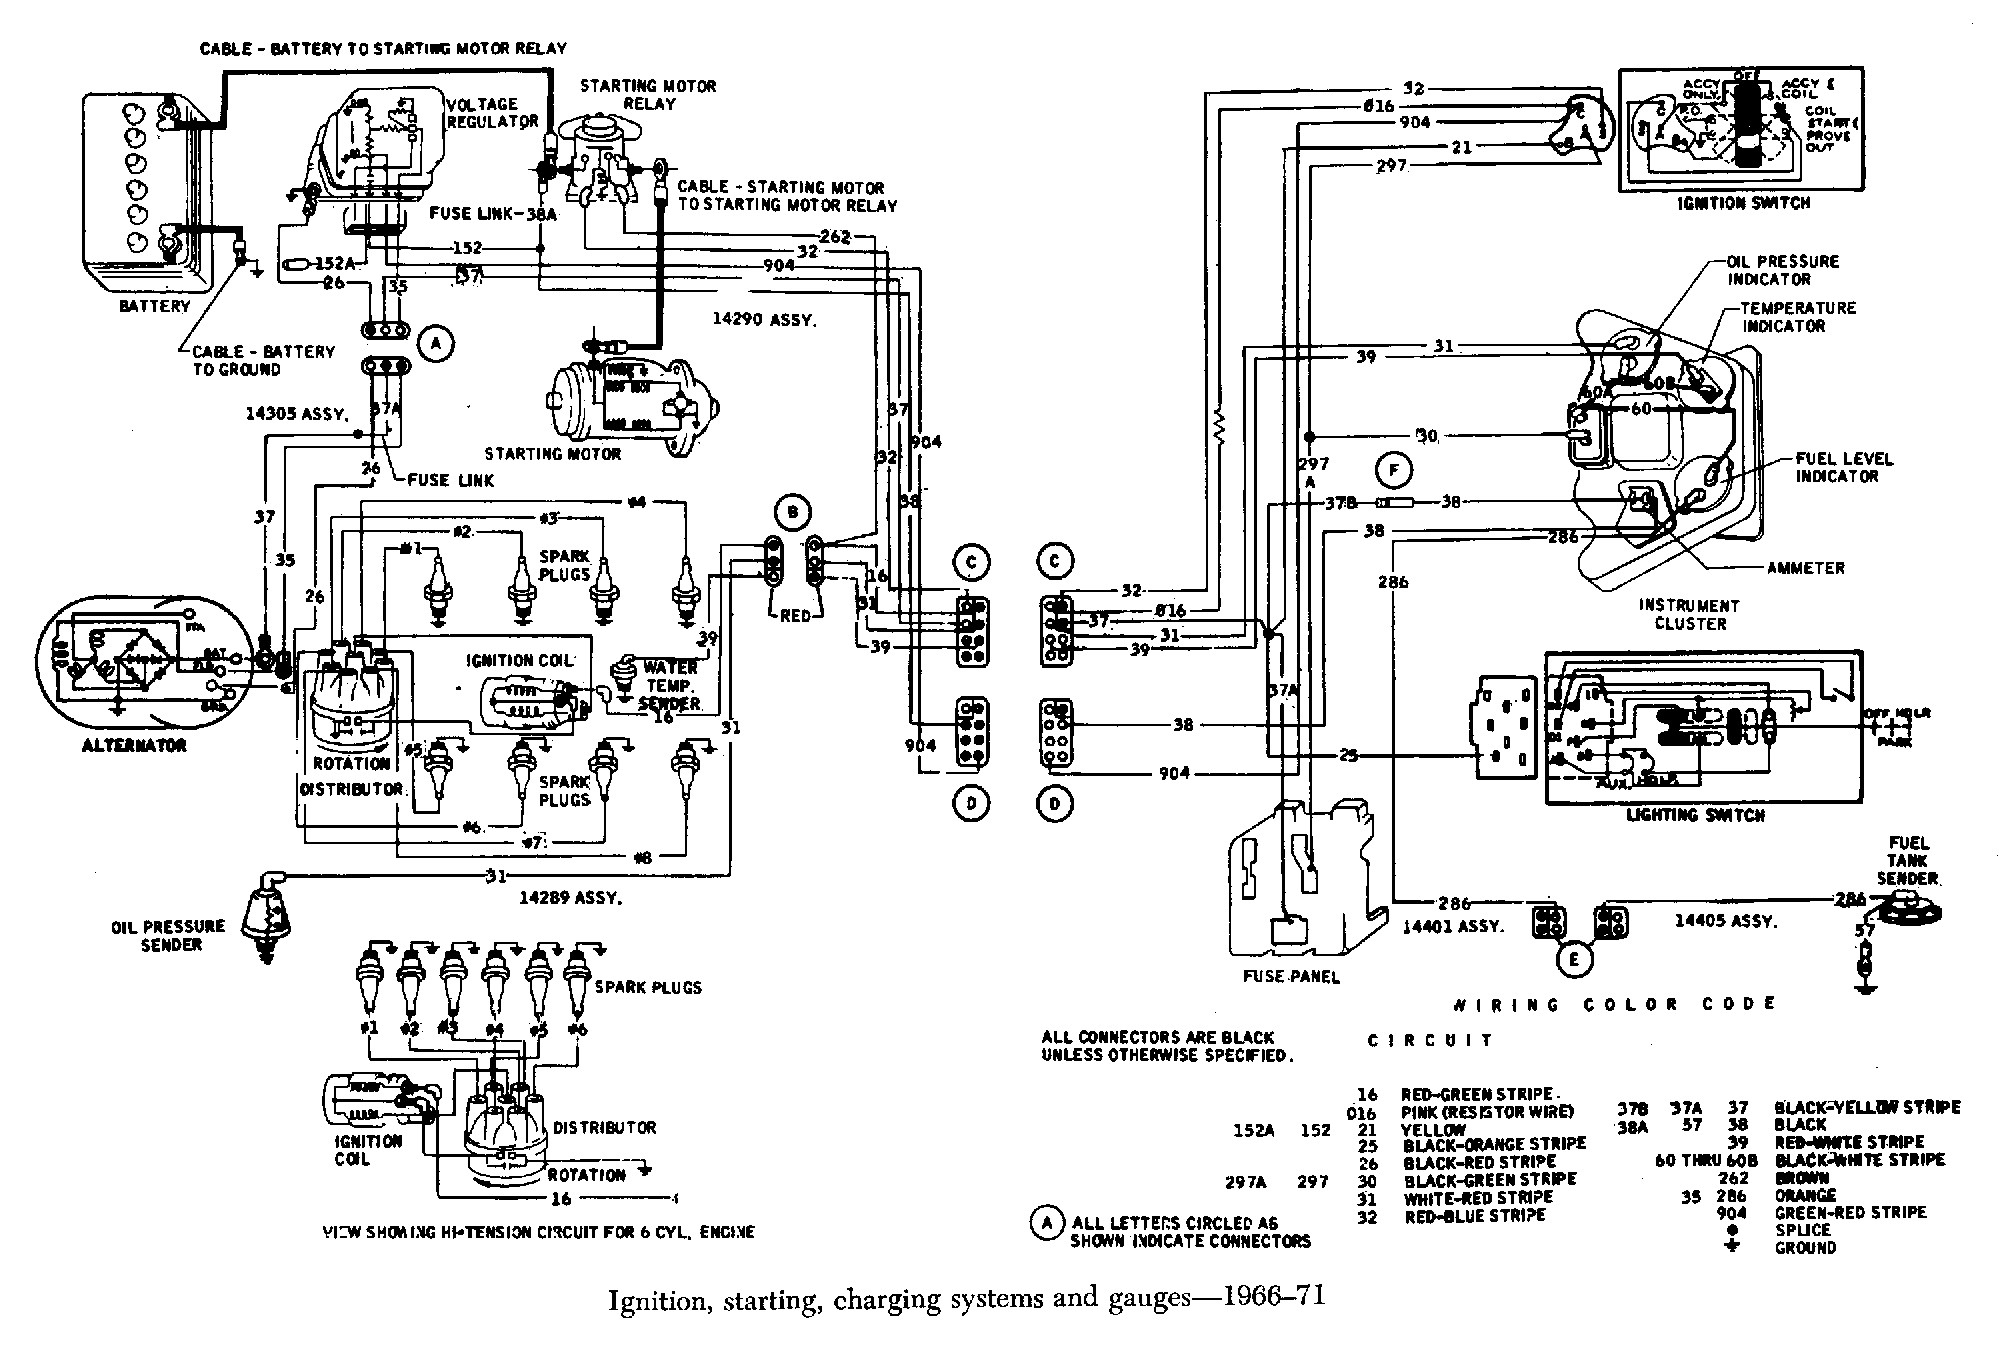 Spark Plug Wiring Diagram Chevy 350 | Switch Wiring Diagram Free - Spark Plug Wiring Diagram Chevy 350